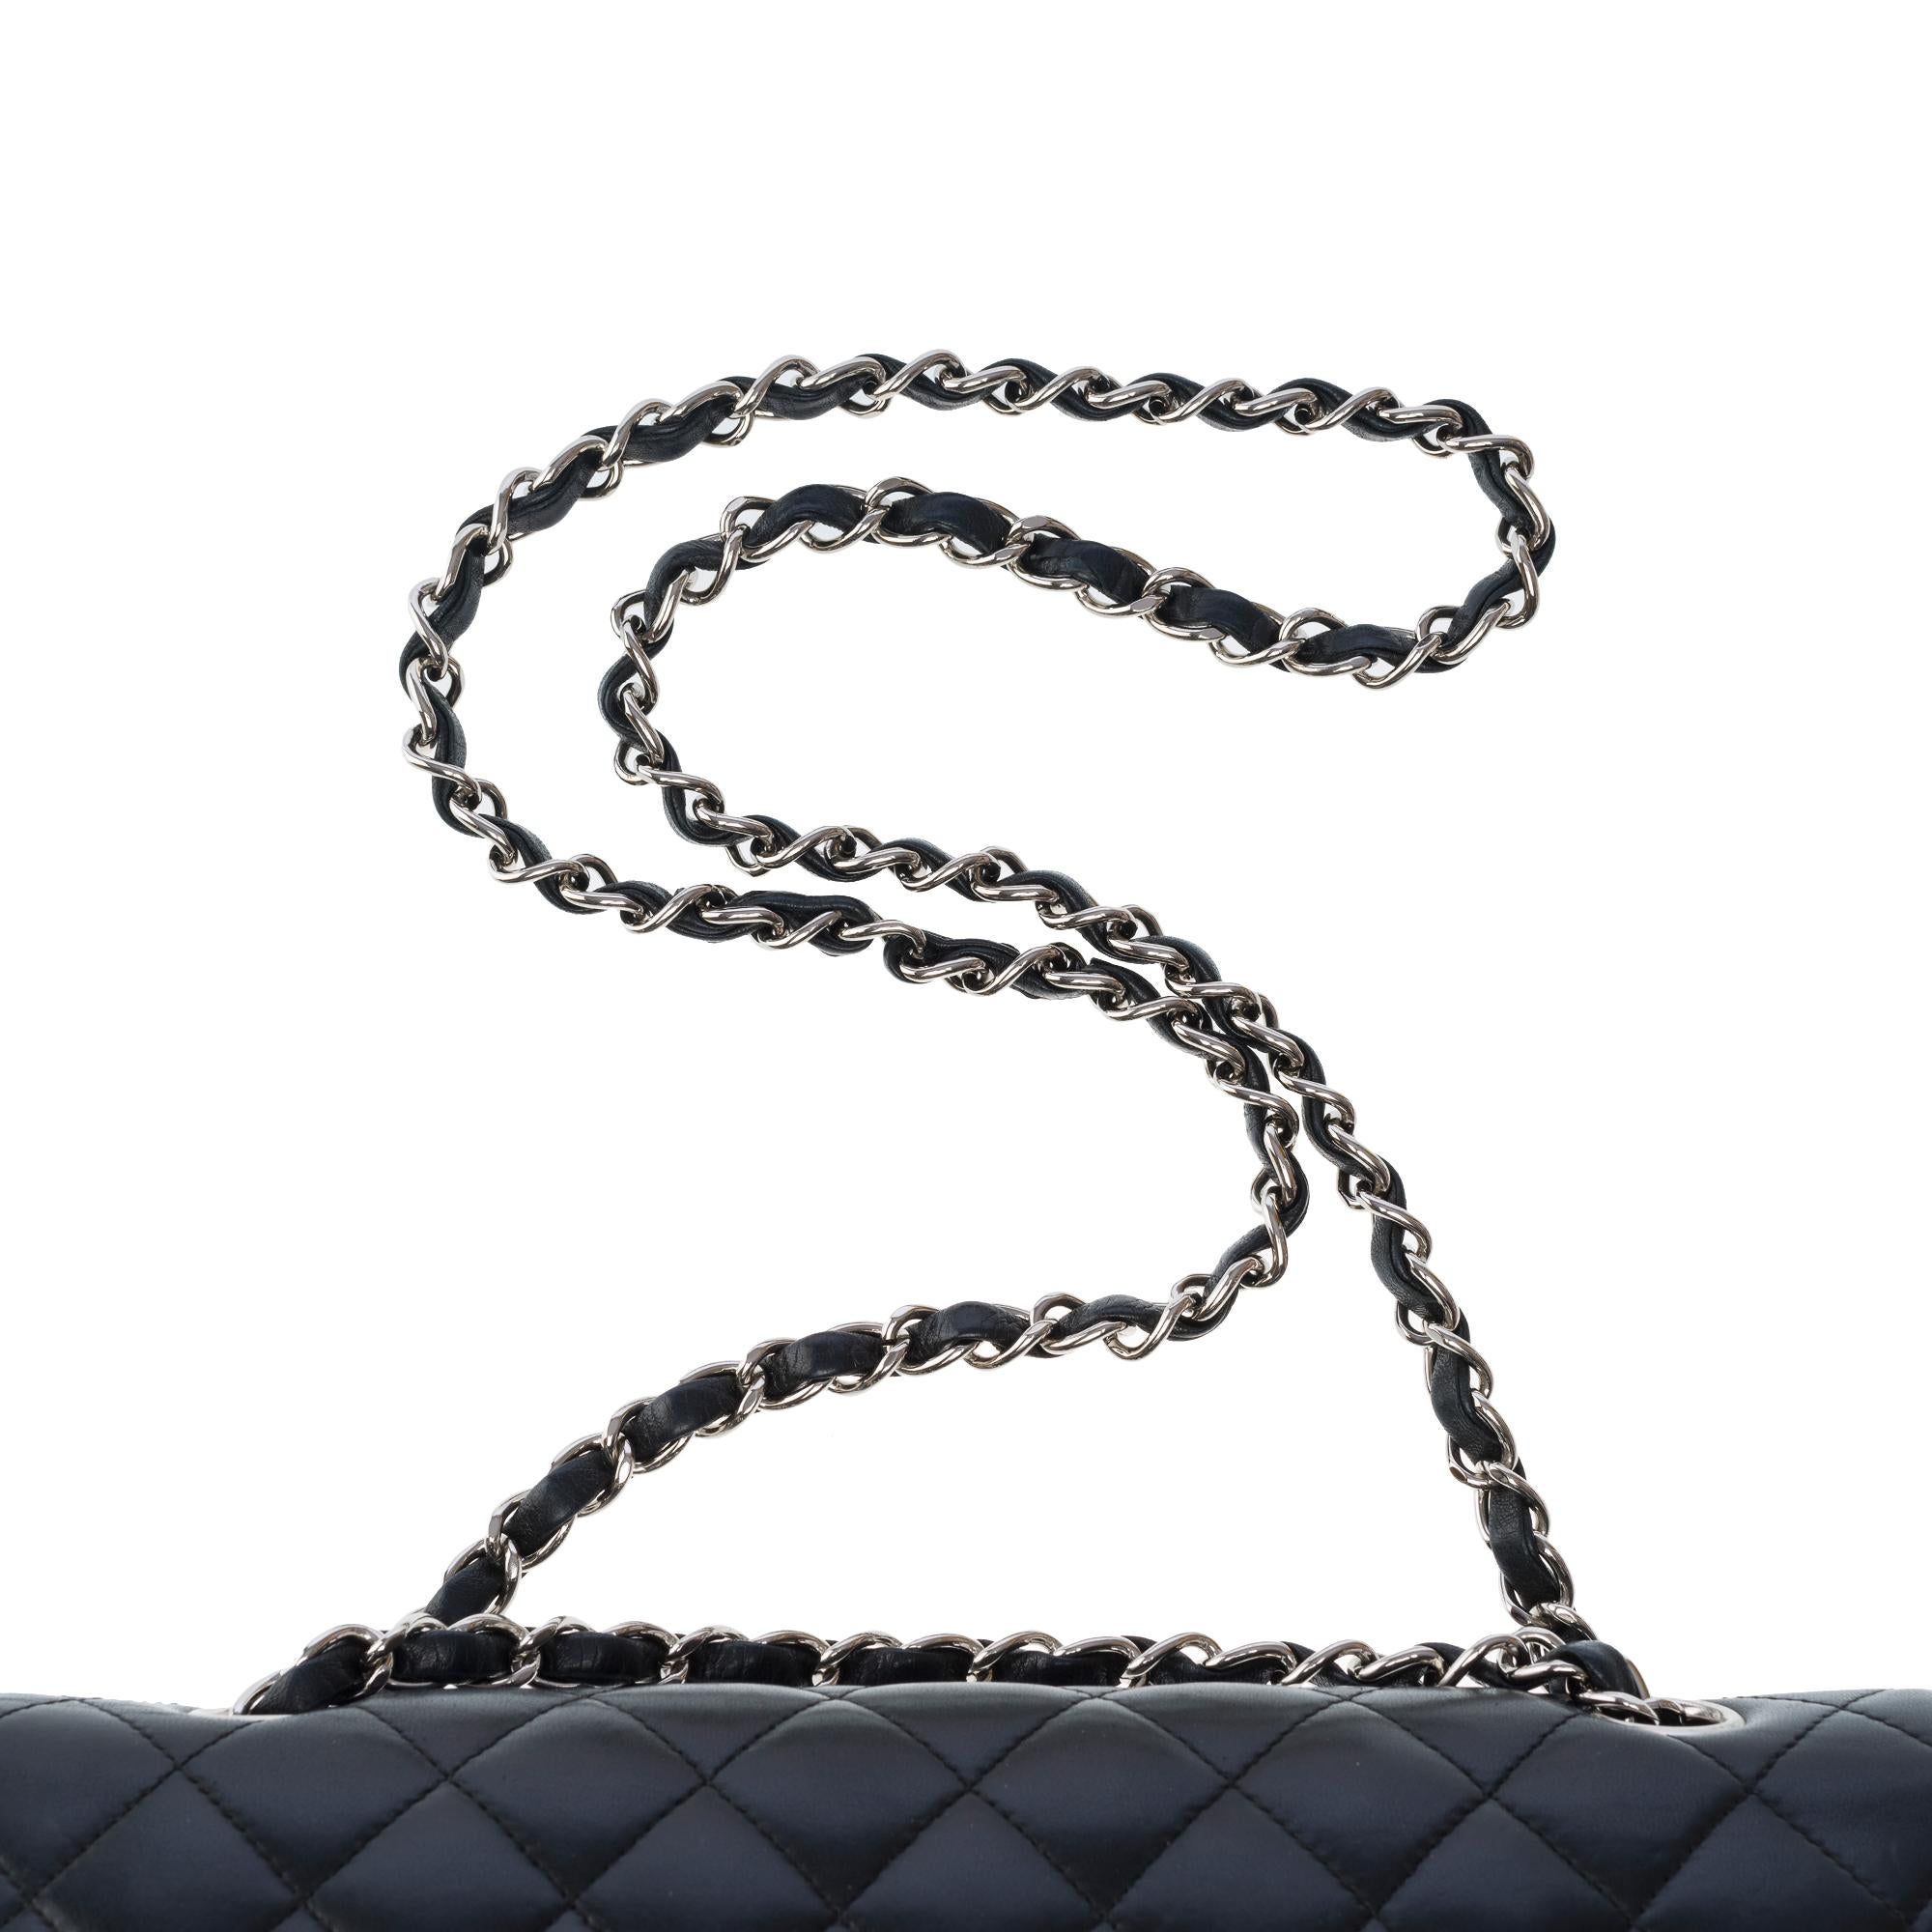 Chanel Timeless Medium 25cm double flap shoulder bag in black lambskin, SHW 6